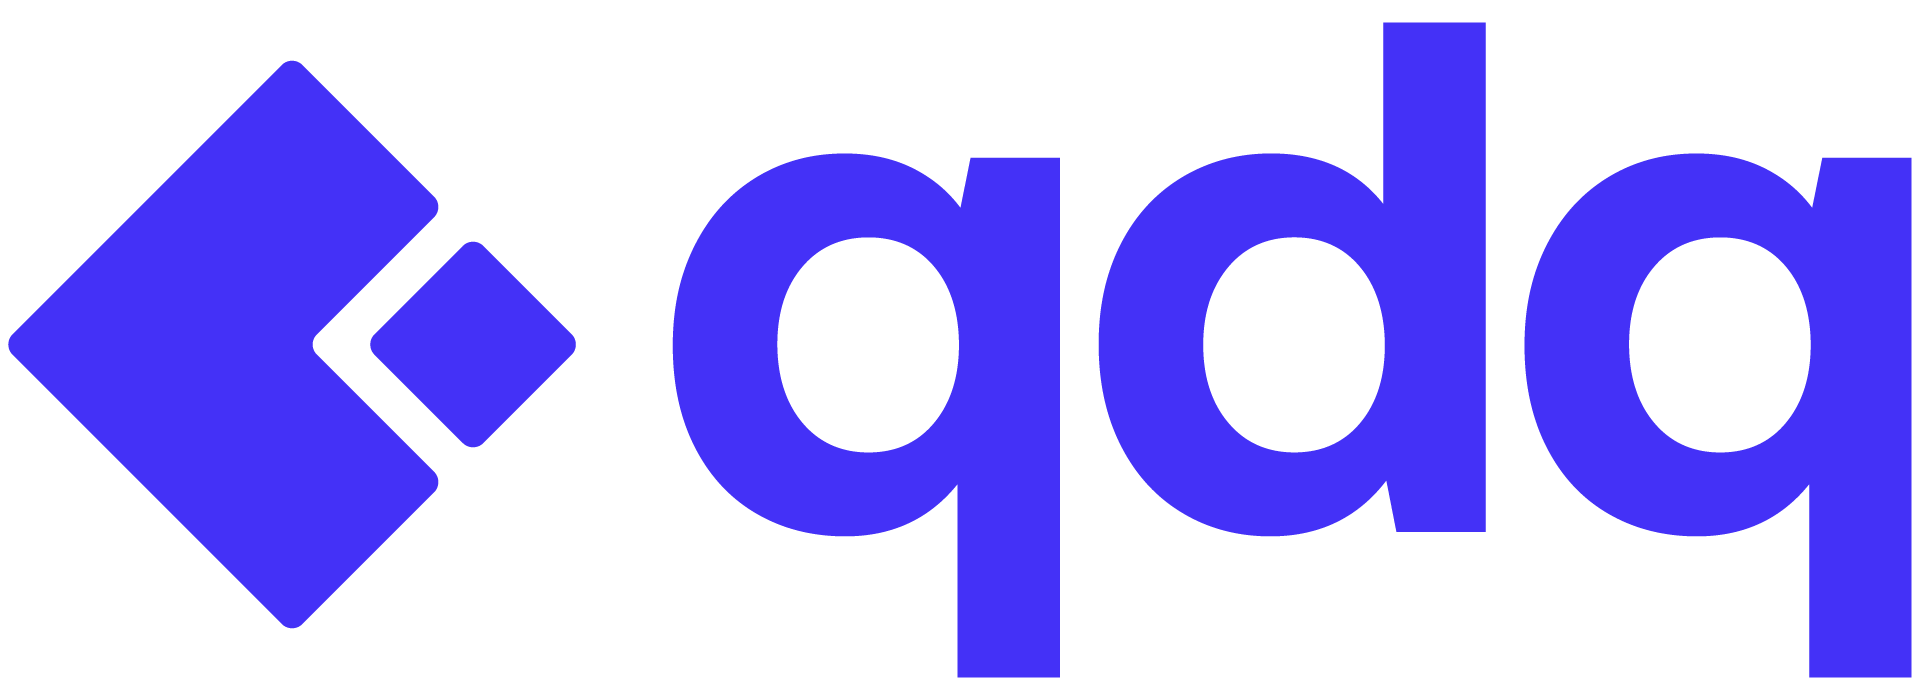 logo qdq